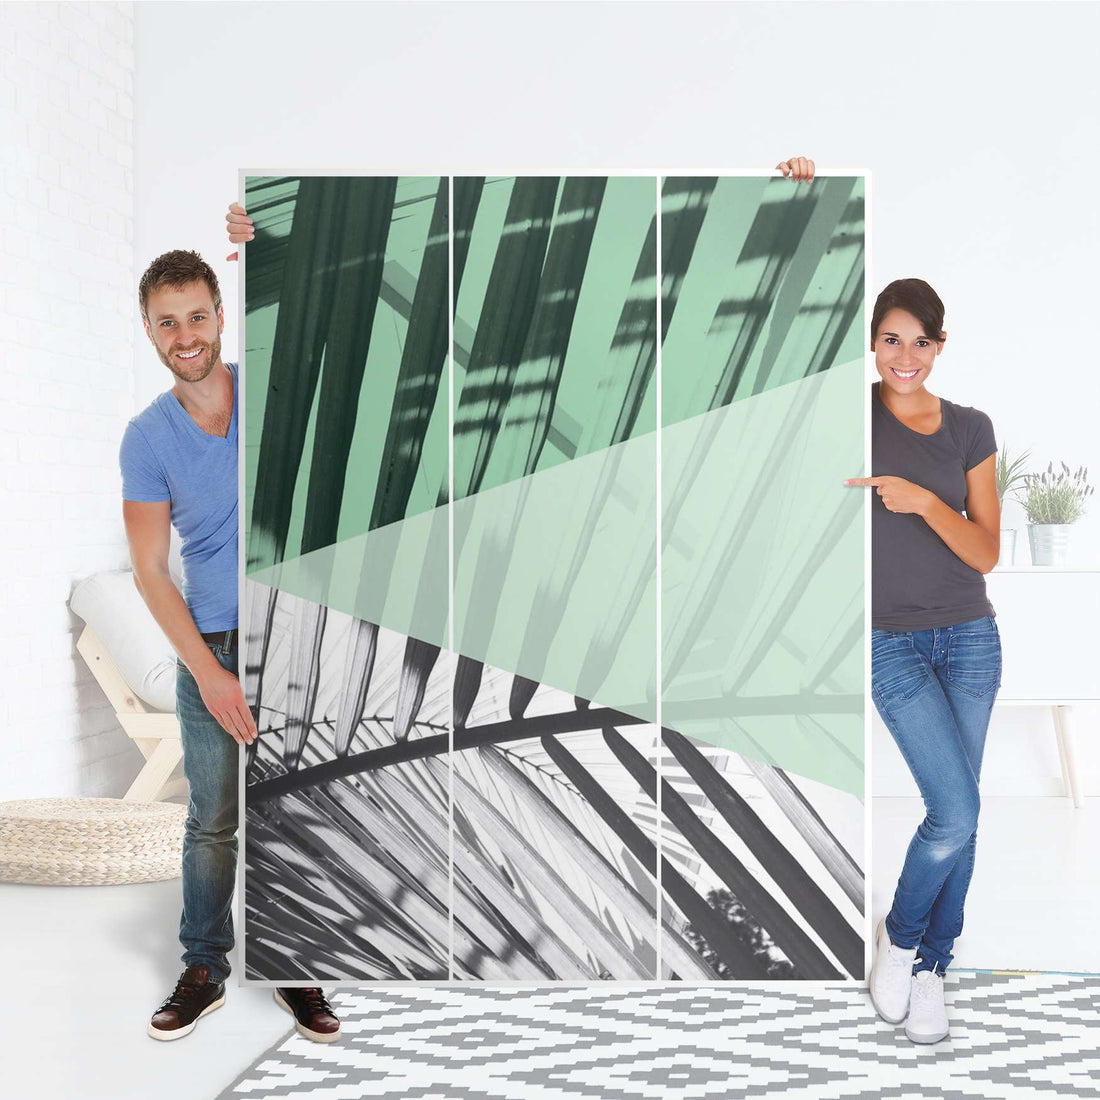 Folie für Möbel Palmen mint - IKEA Pax Schrank 201 cm Höhe - 3 Türen - Folie